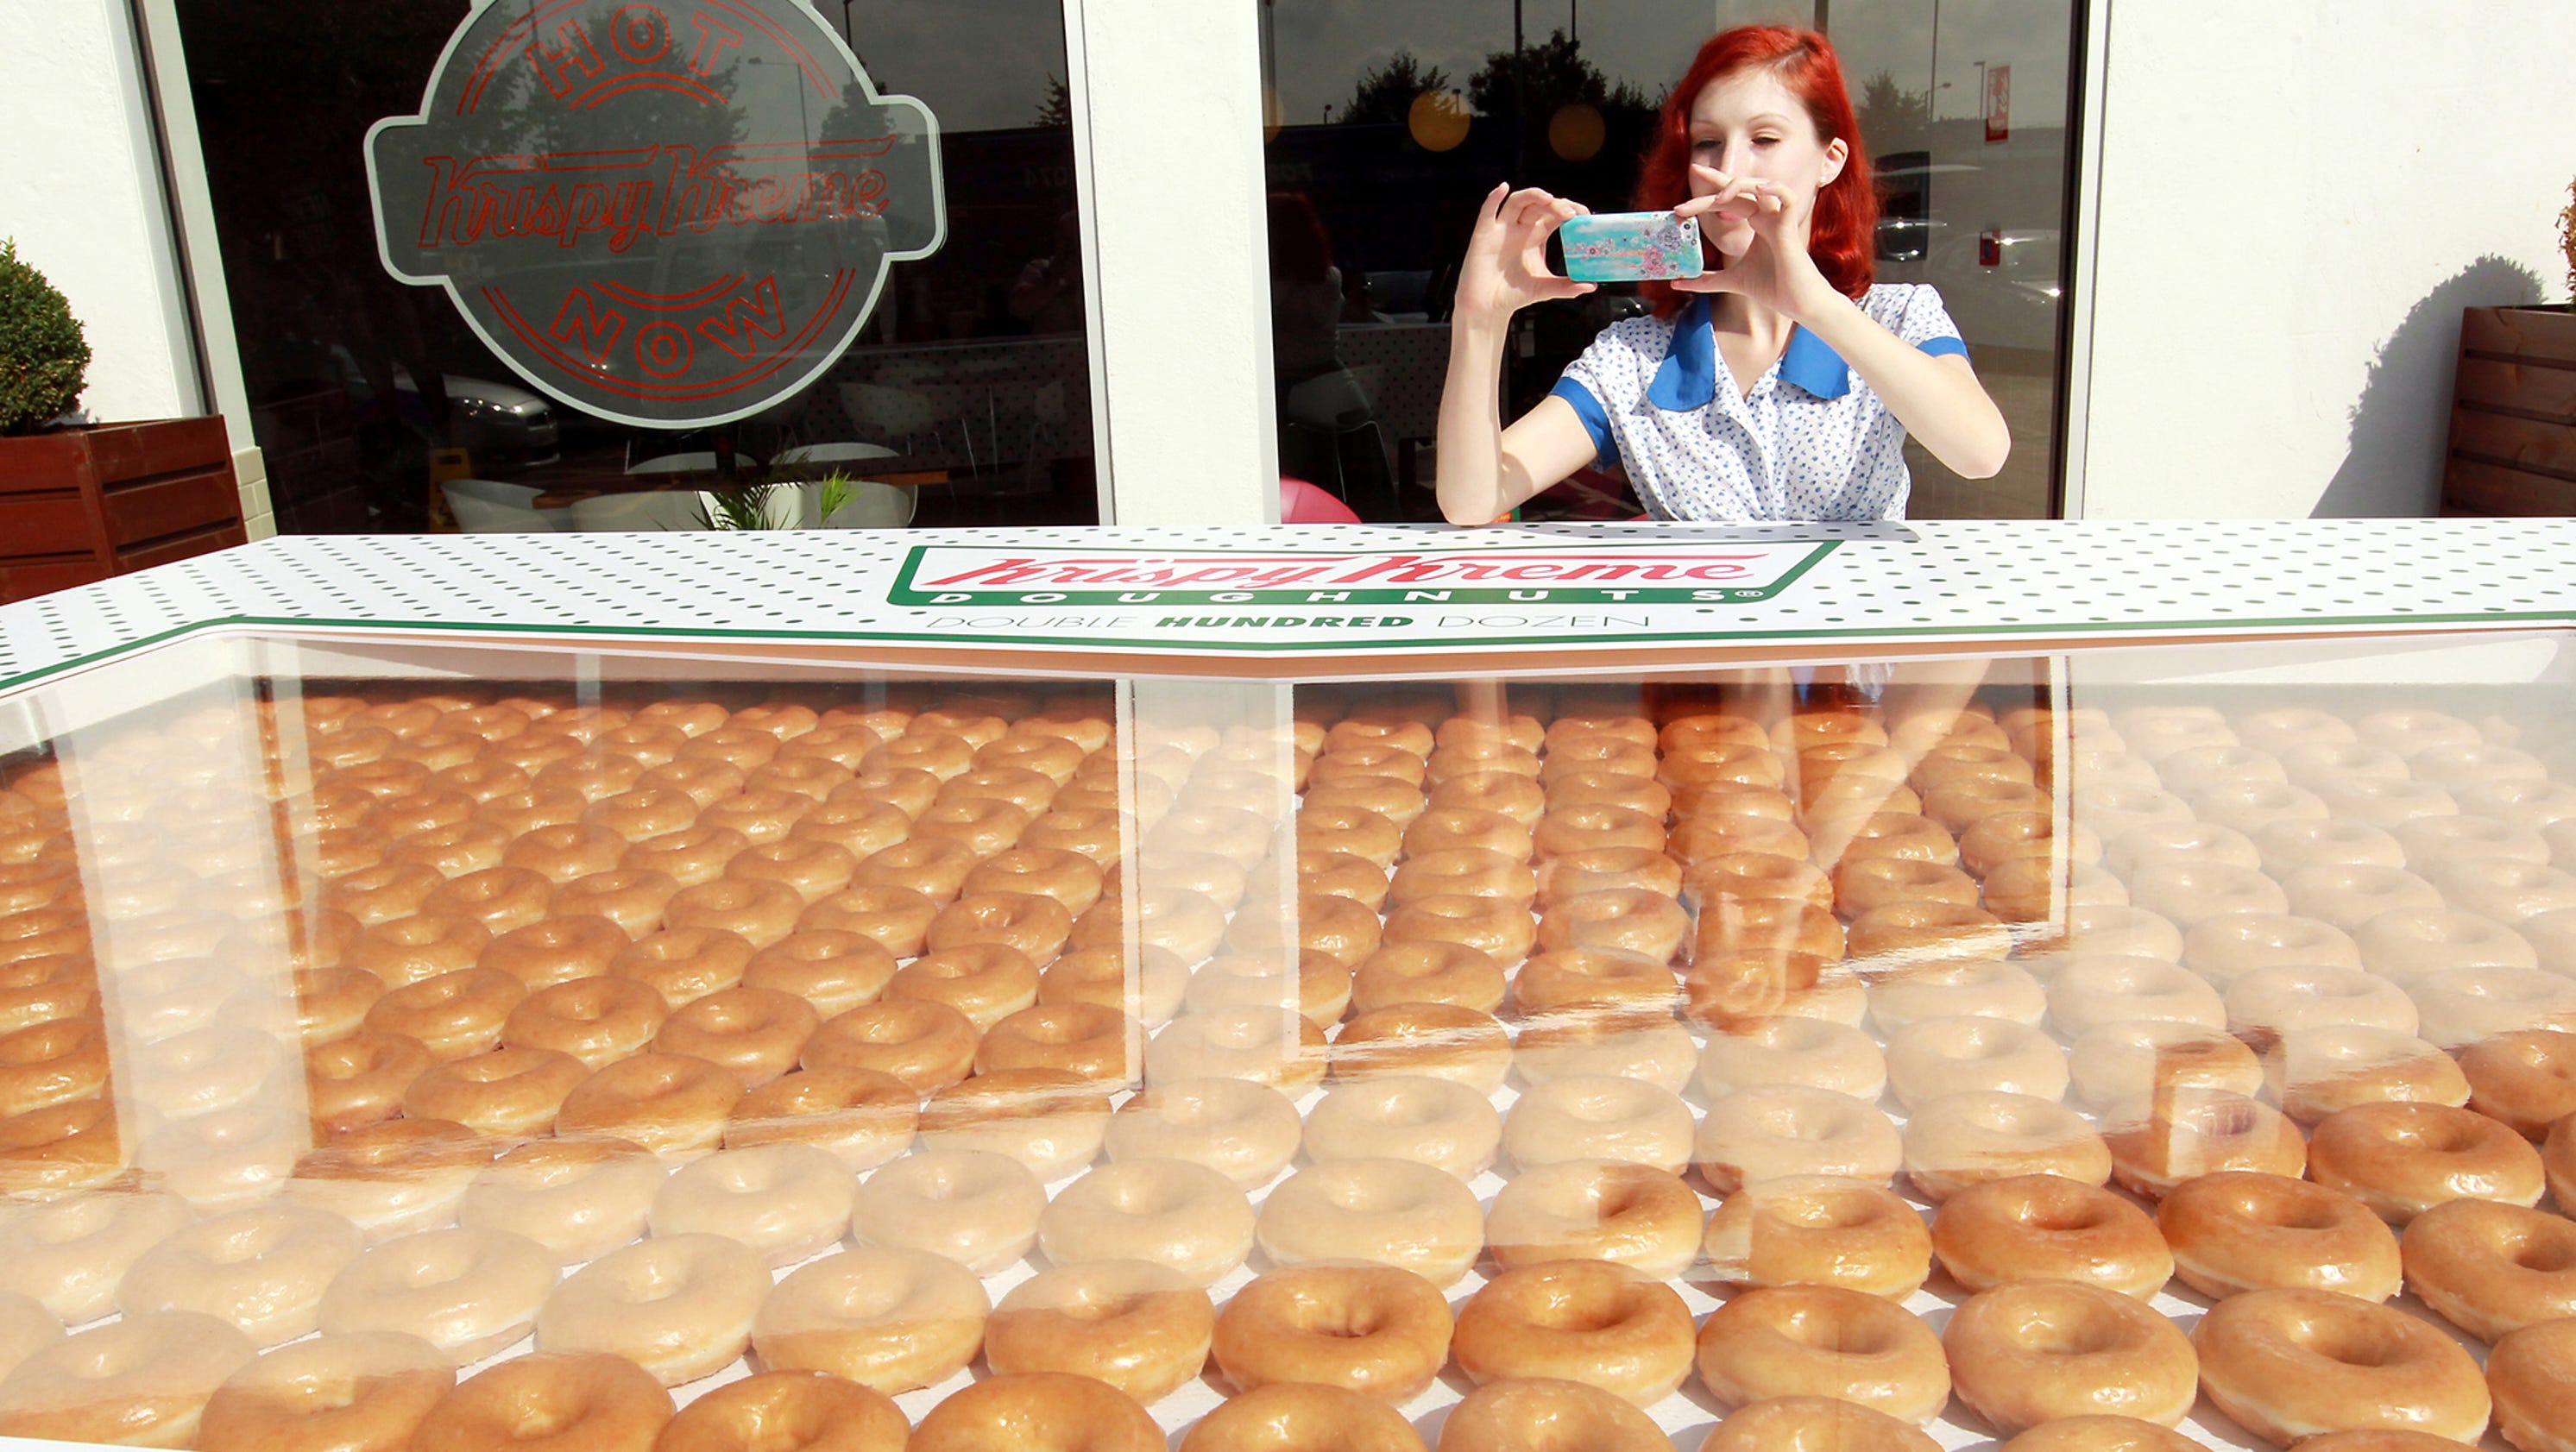 Krispy Kreme's giant box of doughnuts3200 x 1680